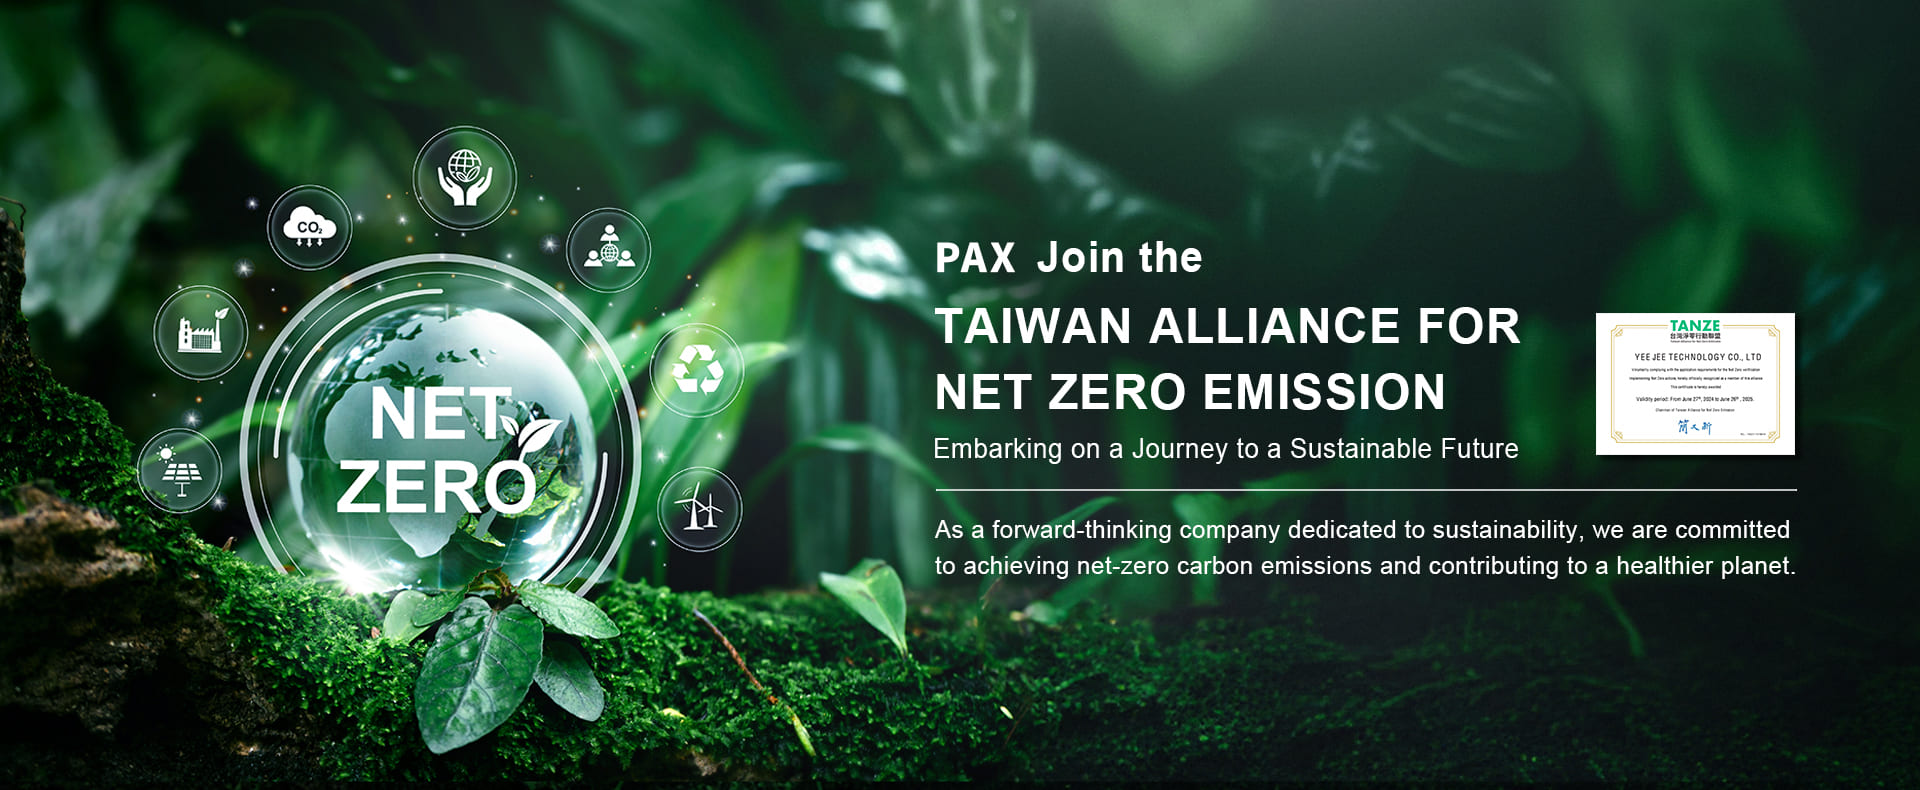 Taiwan Alliance for Net Zero Emission